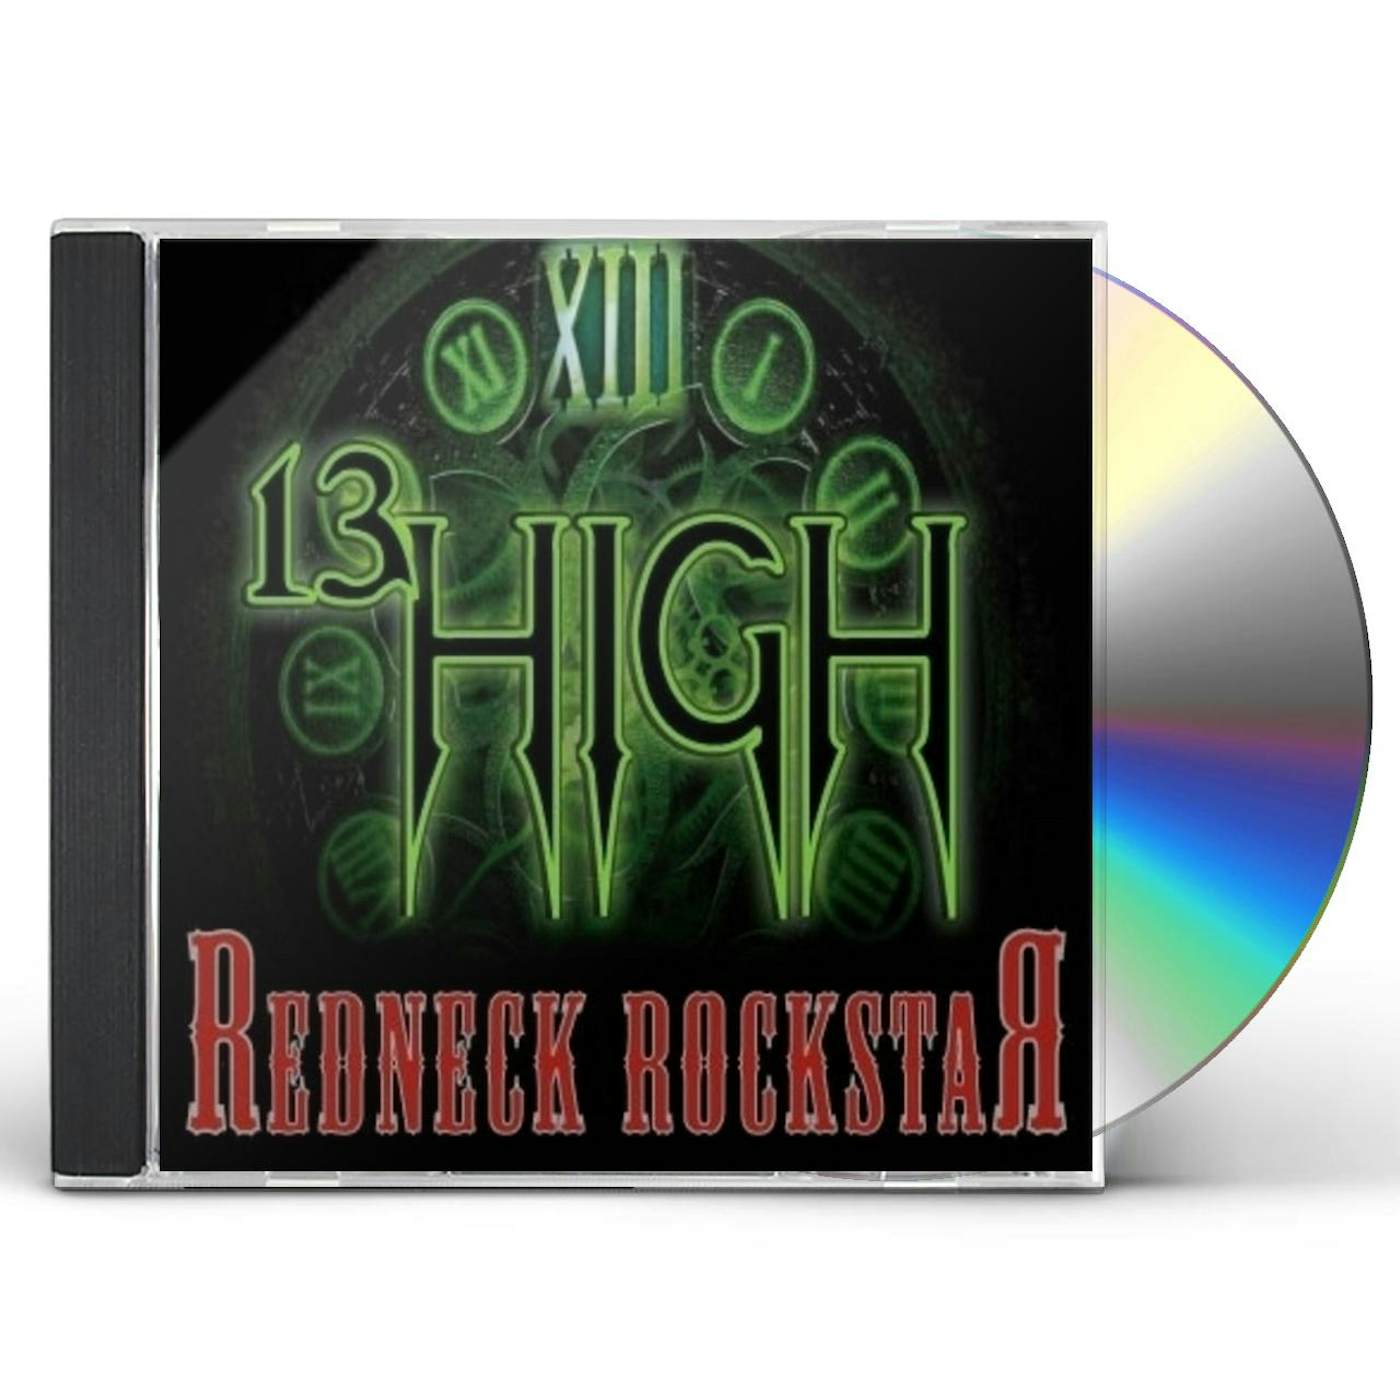 13 High REDNECK ROCKSTAR CD